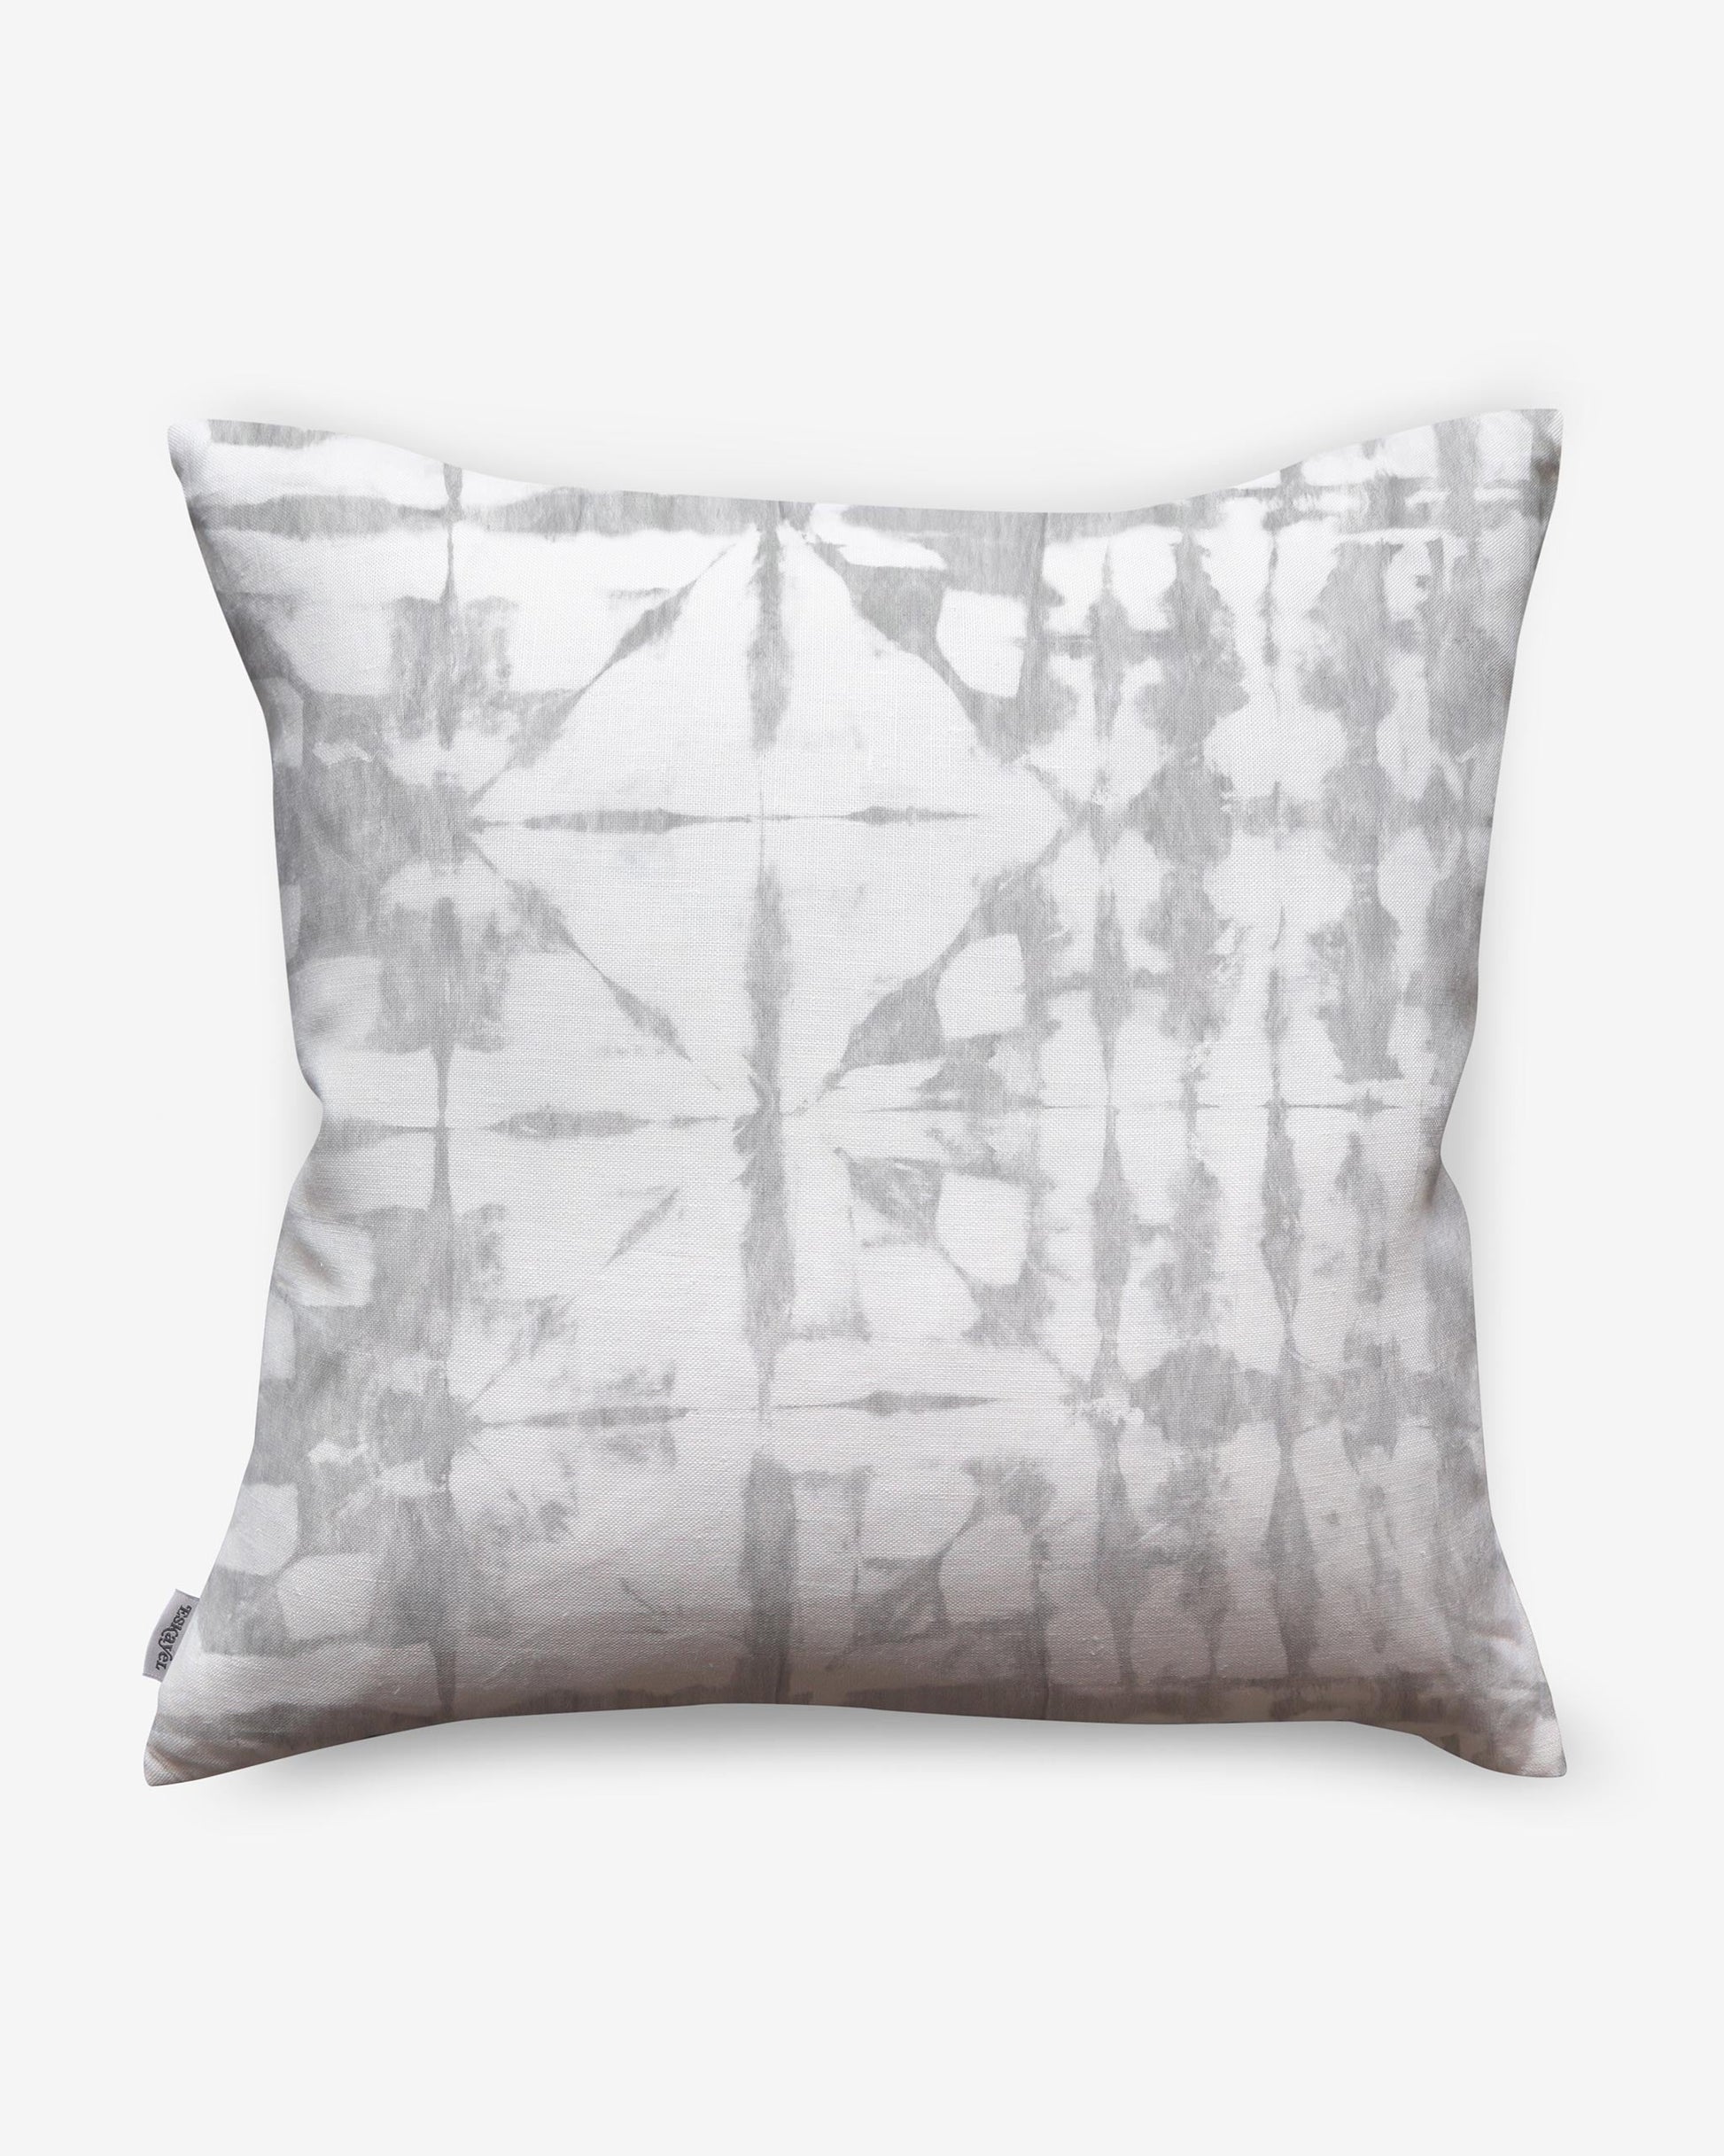 A gray Banda Pillow with an abstract design